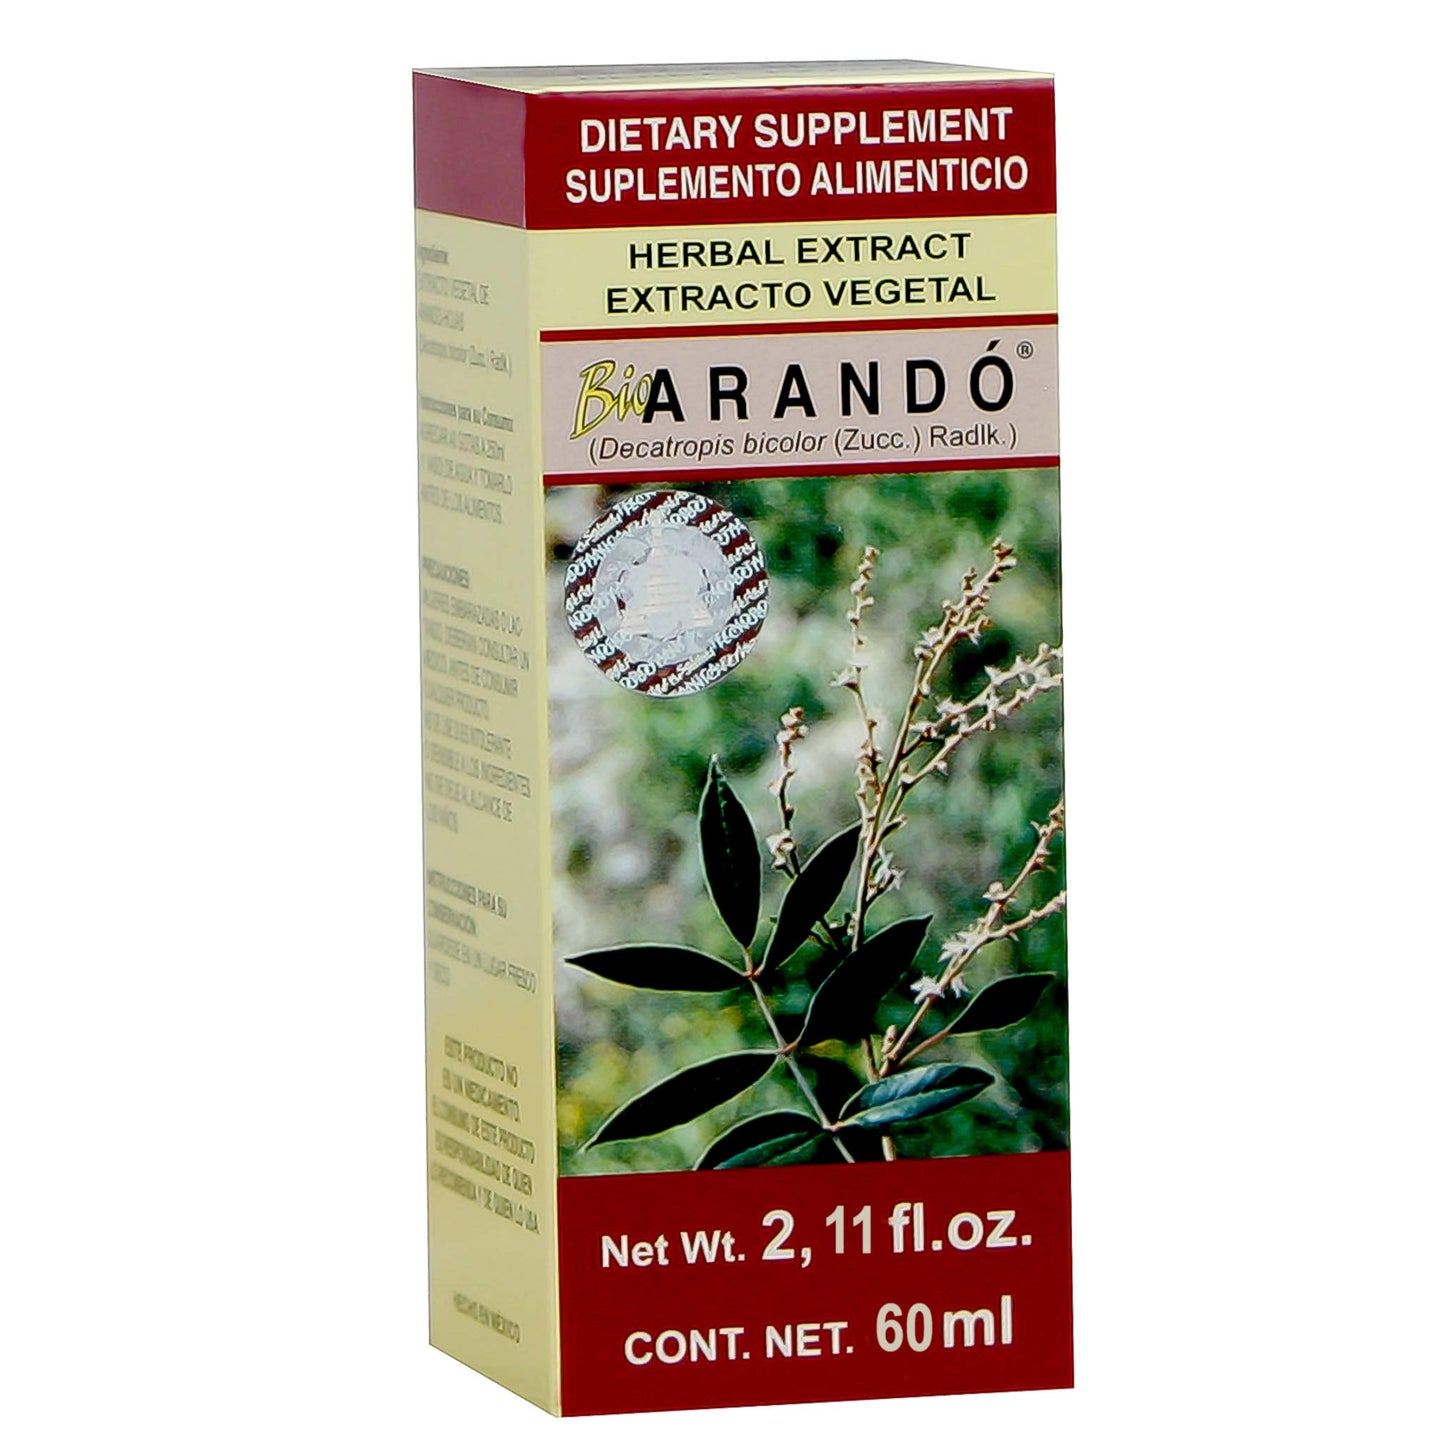 BIOARANDO ® extracto vegetal 60ml